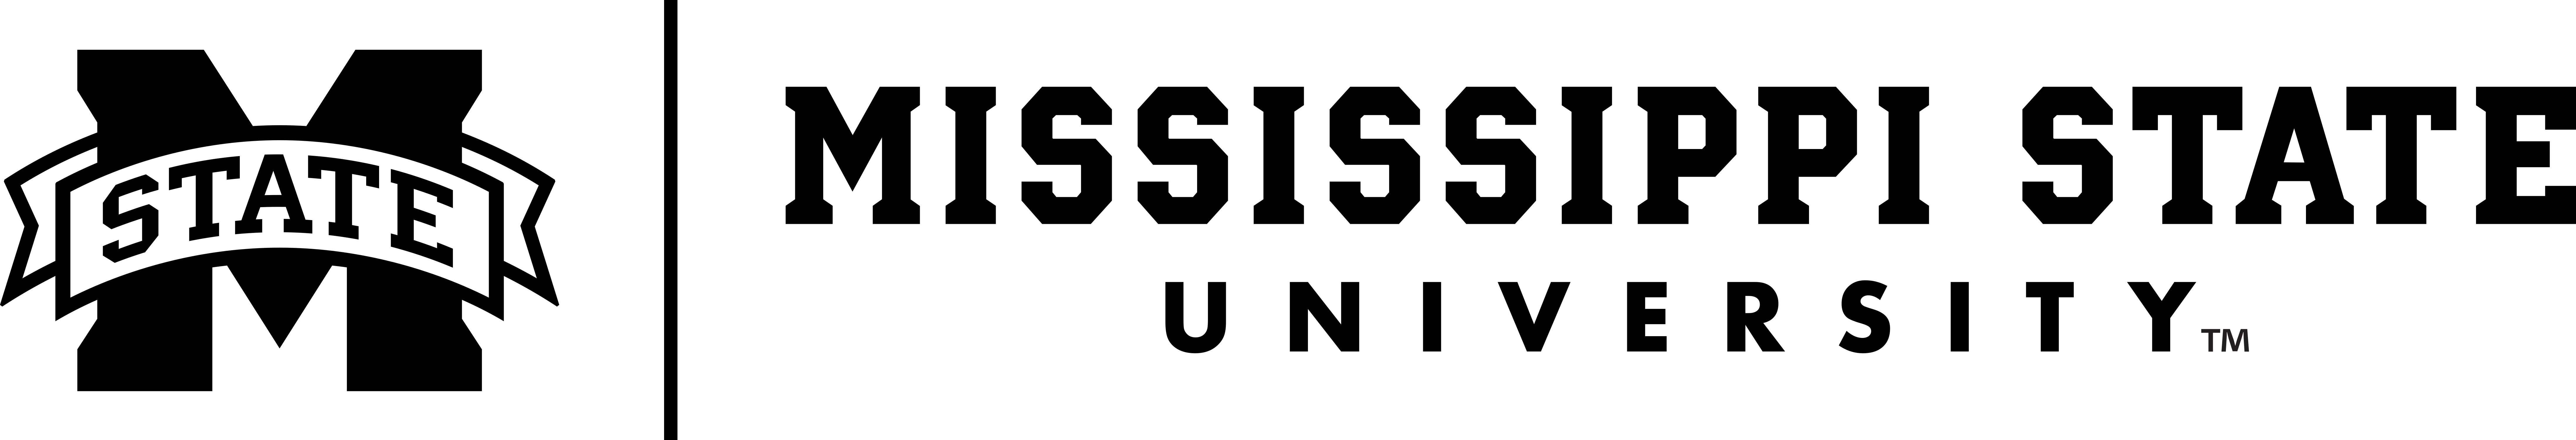 Mississippi Logo - Office of Public Affairs. Mississippi State University